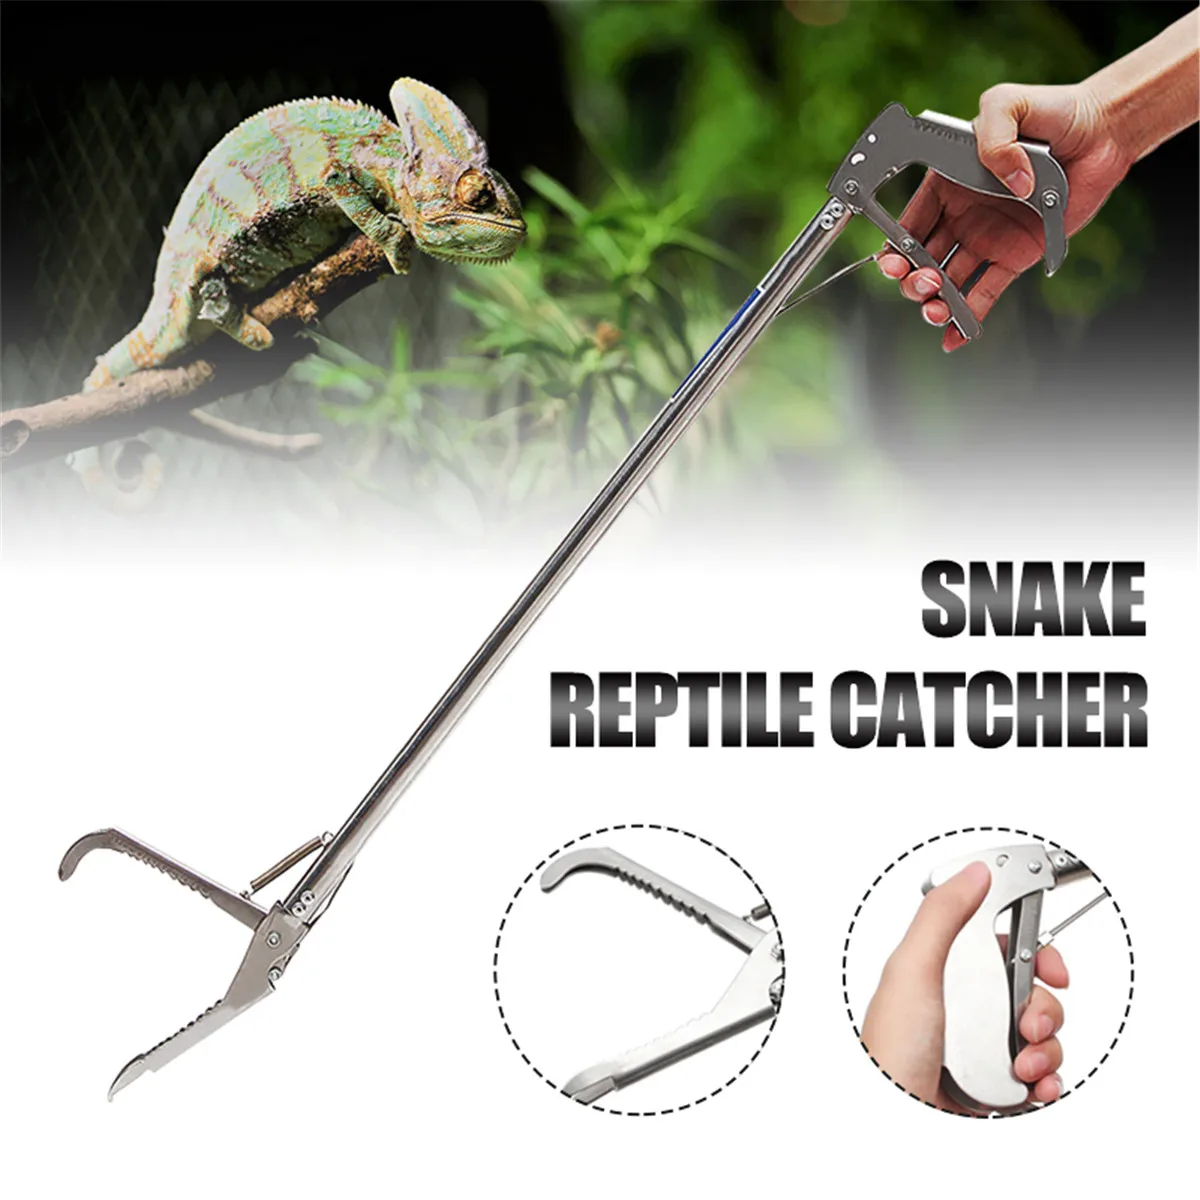 https://ae01.alicdn.com/kf/HTB1KrPzaEH1gK0jSZSyq6xtlpXas/Quickly-Reptile-Snake-Catcher-Tongs-Stick-120CM-100-75-Professional-Stainless-Steel-Pest-Control-Product-Grabber.jpg